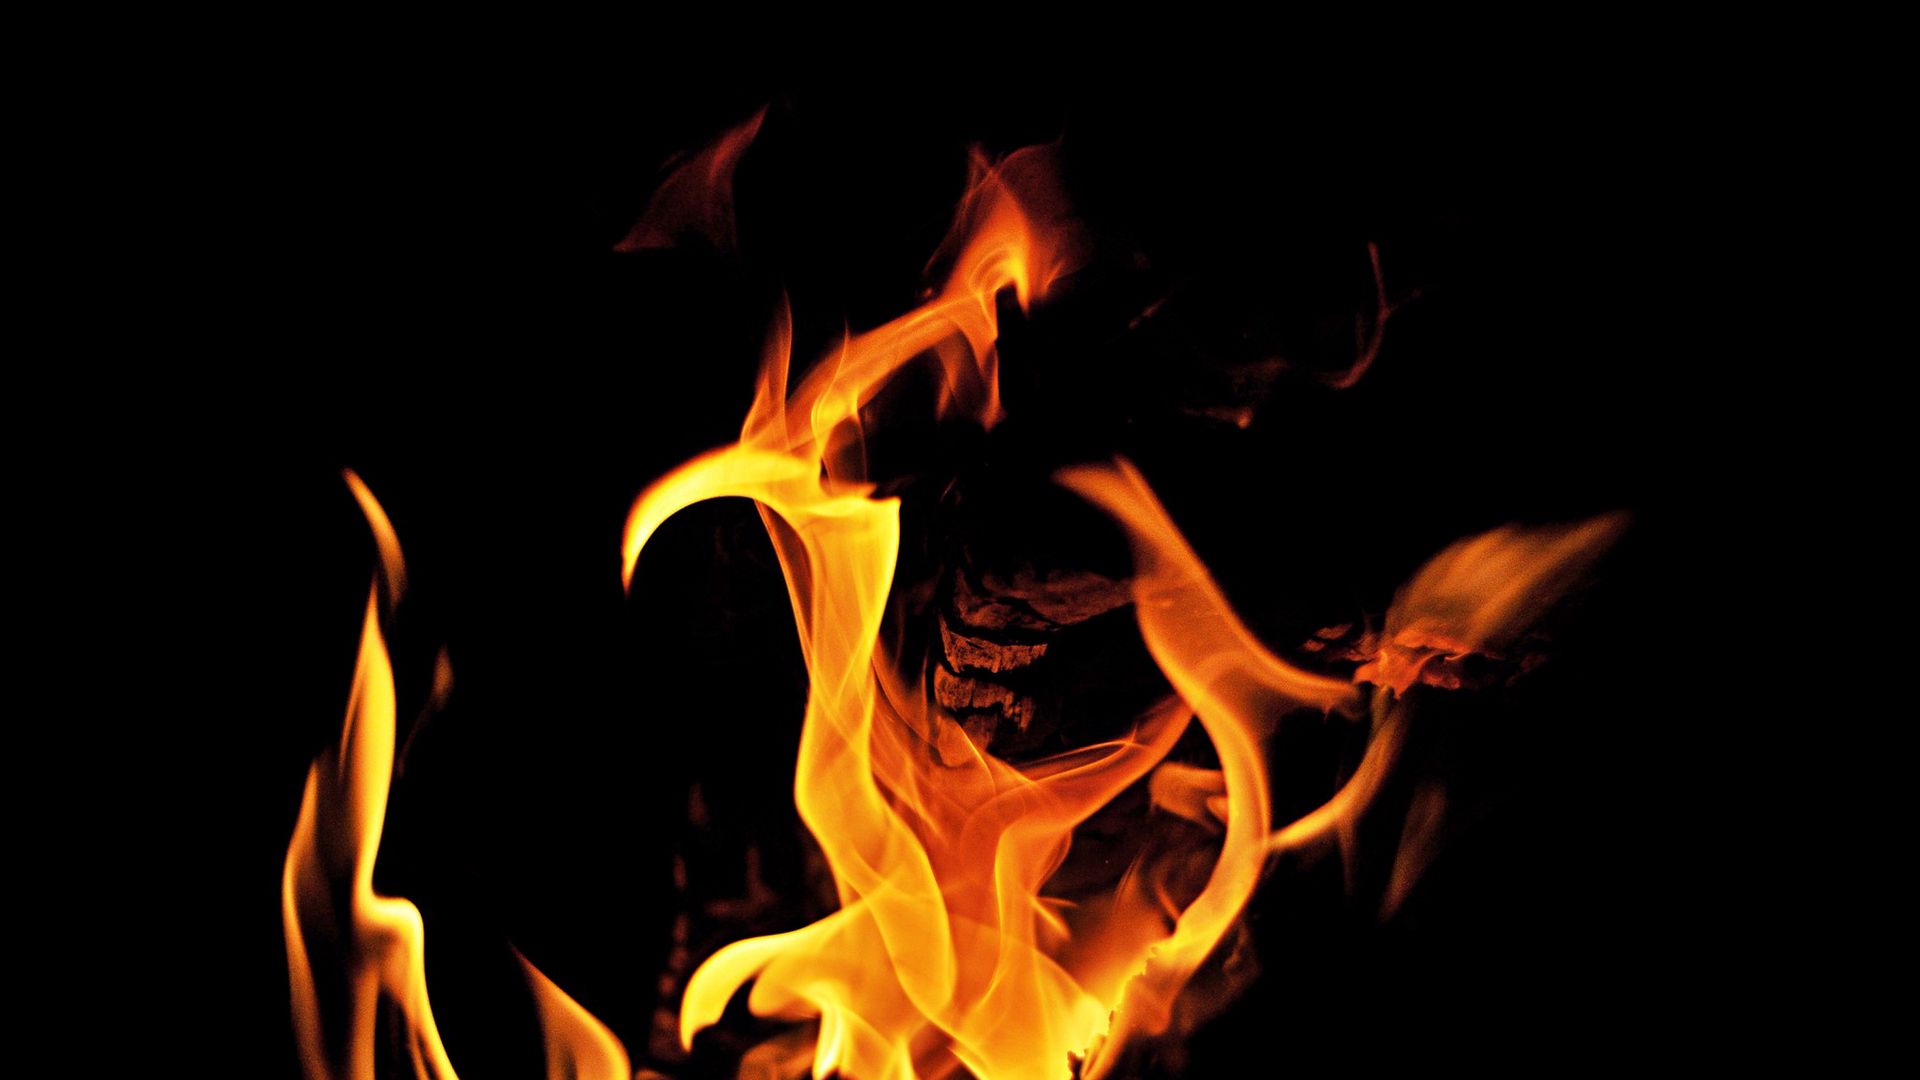 Download wallpaper 1920x1080 flame, fire, bonfire, black full hd, hdtv ...